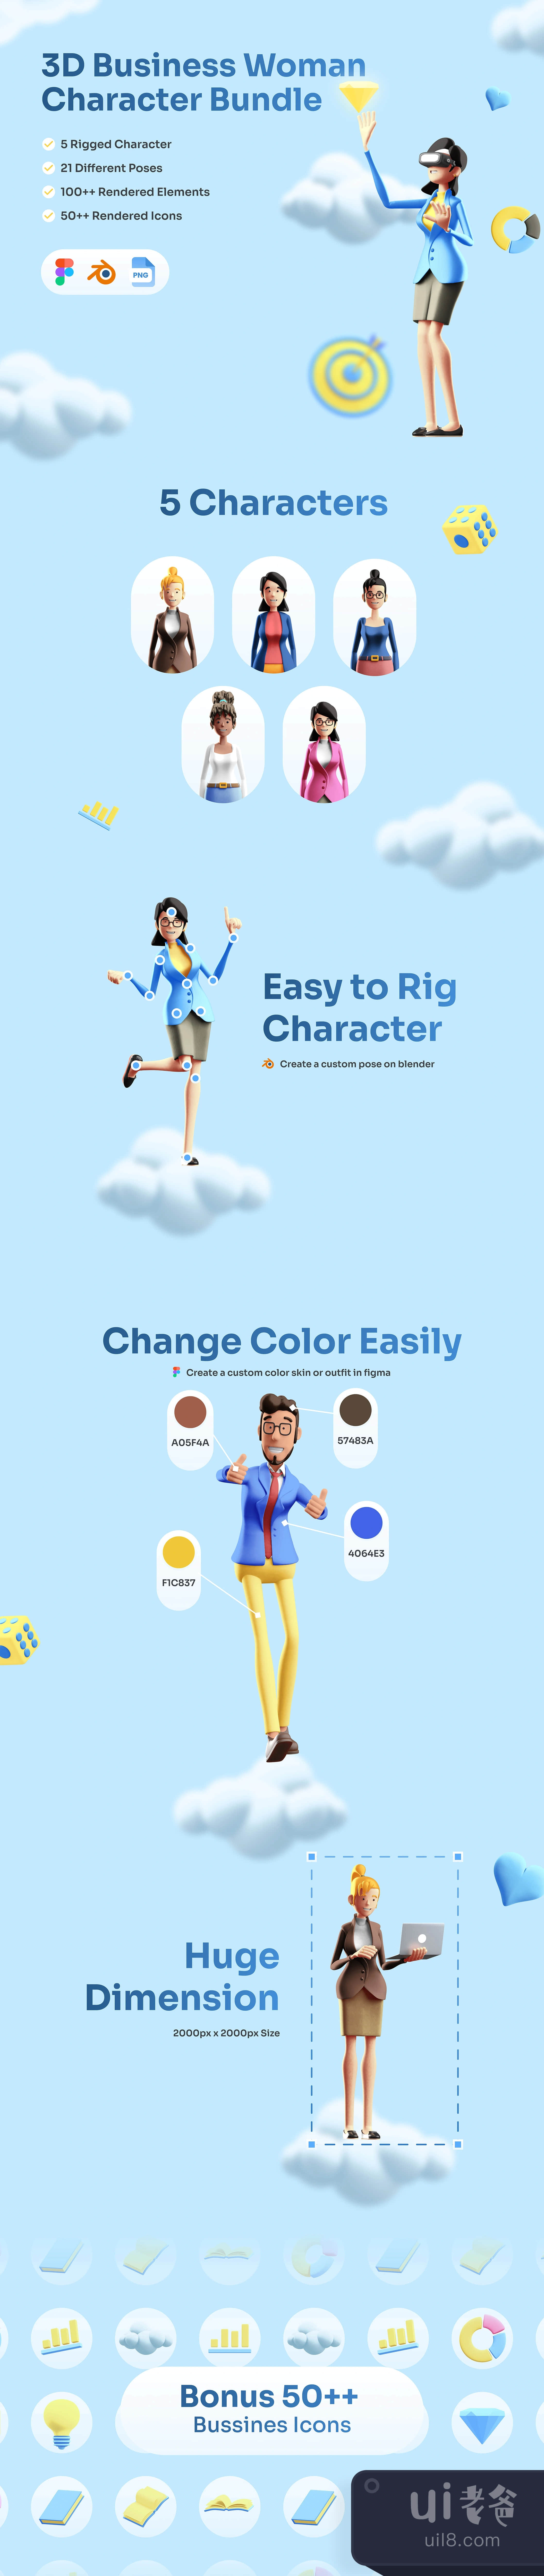 三维商业字符包 (3D Business Character Bundle)插图